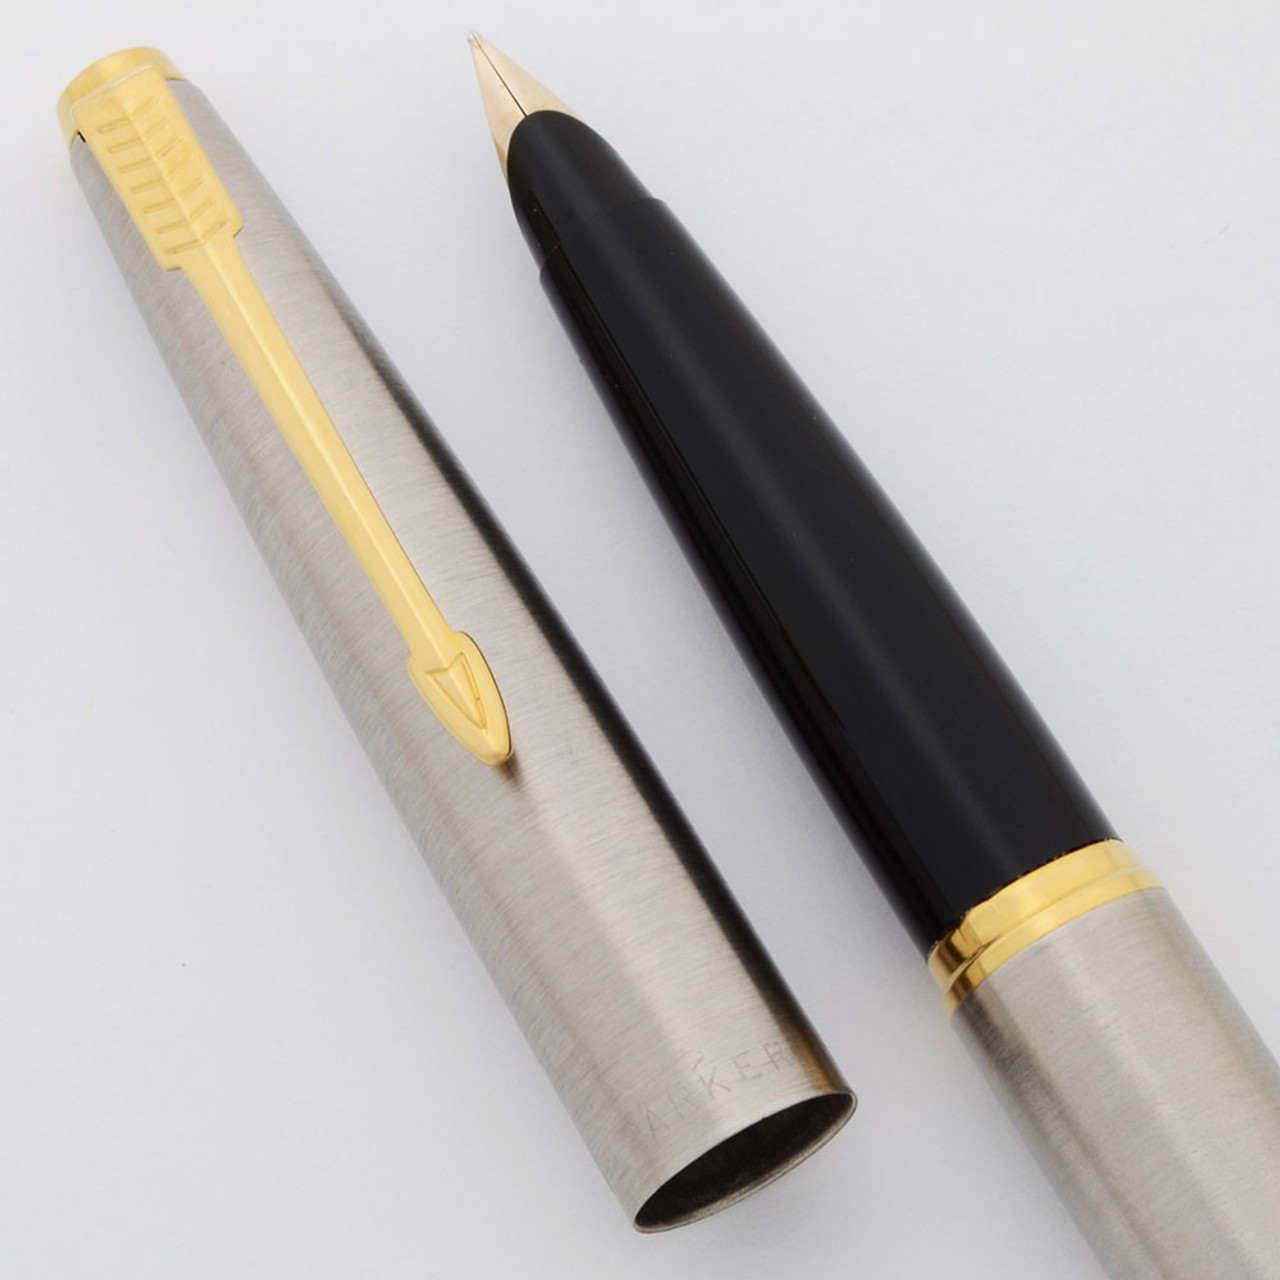 Parker 45 Flighter Fountain Pen (1970s) - Brushed Steel, Gold Trim, 10k Fine Nib (Excellent +, Works Well)